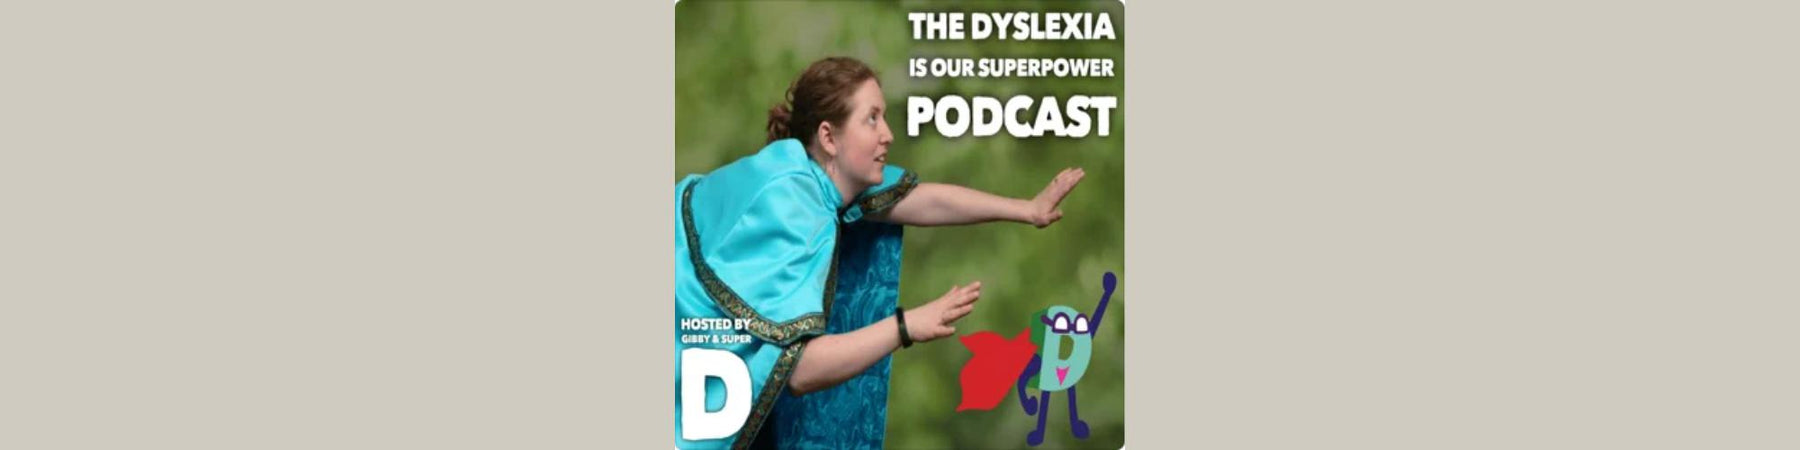 Dyslexic teen superhero Kai Seymo‪n‬ - Interview by Dyslexia is Our Superpower Podcast